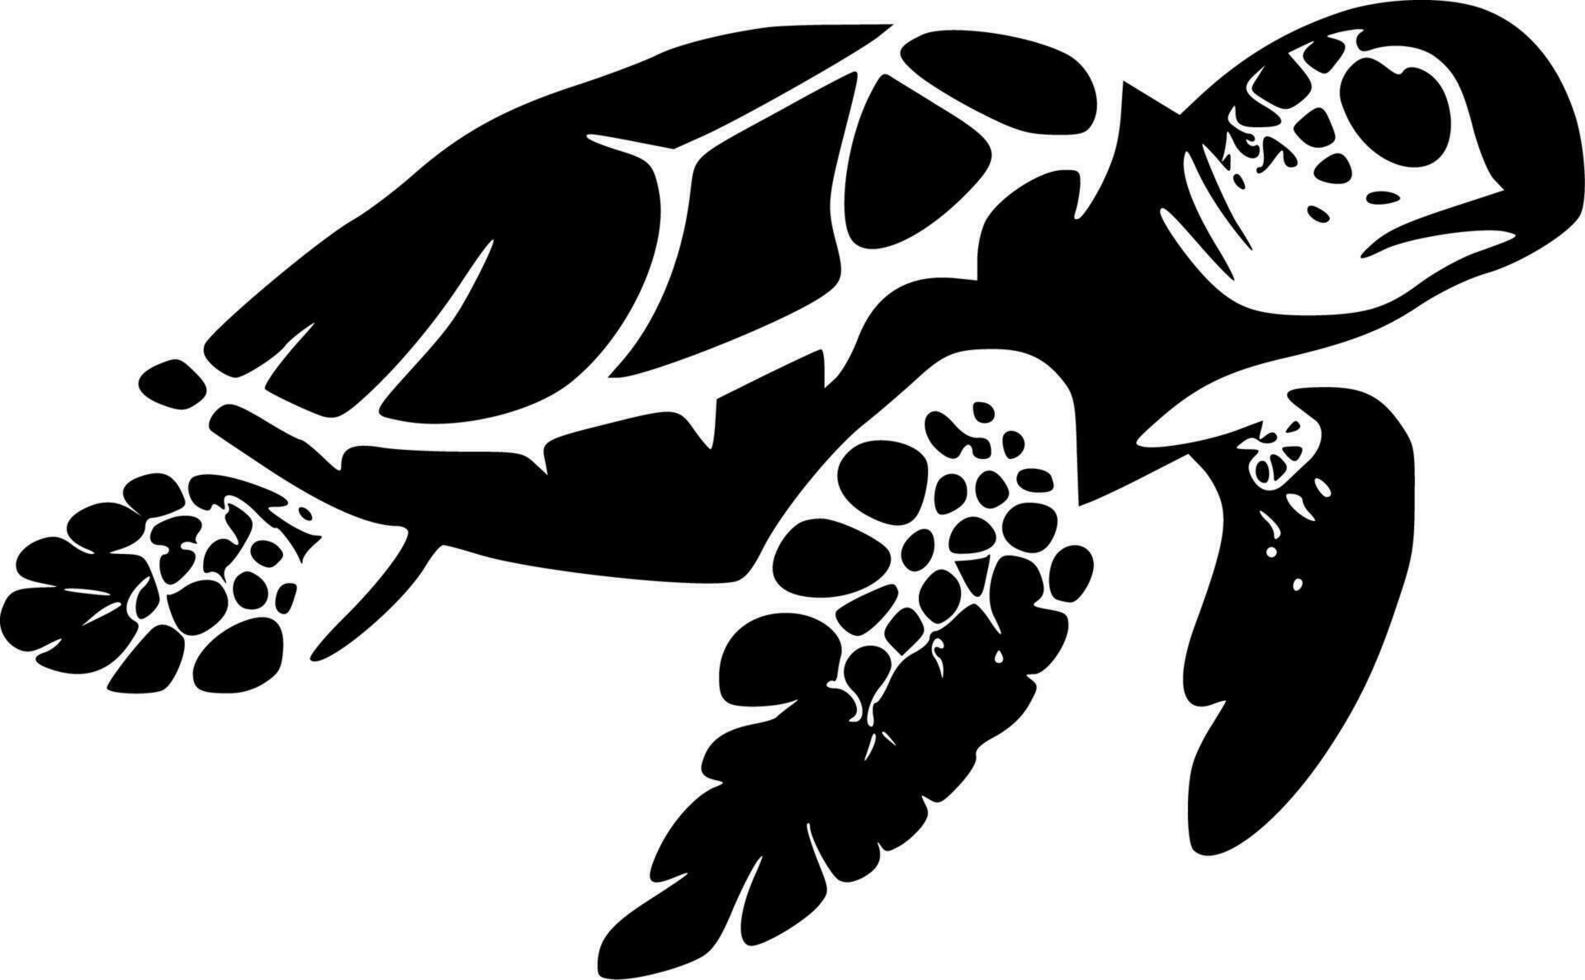 mar tartaruga, Preto e branco vetor ilustração